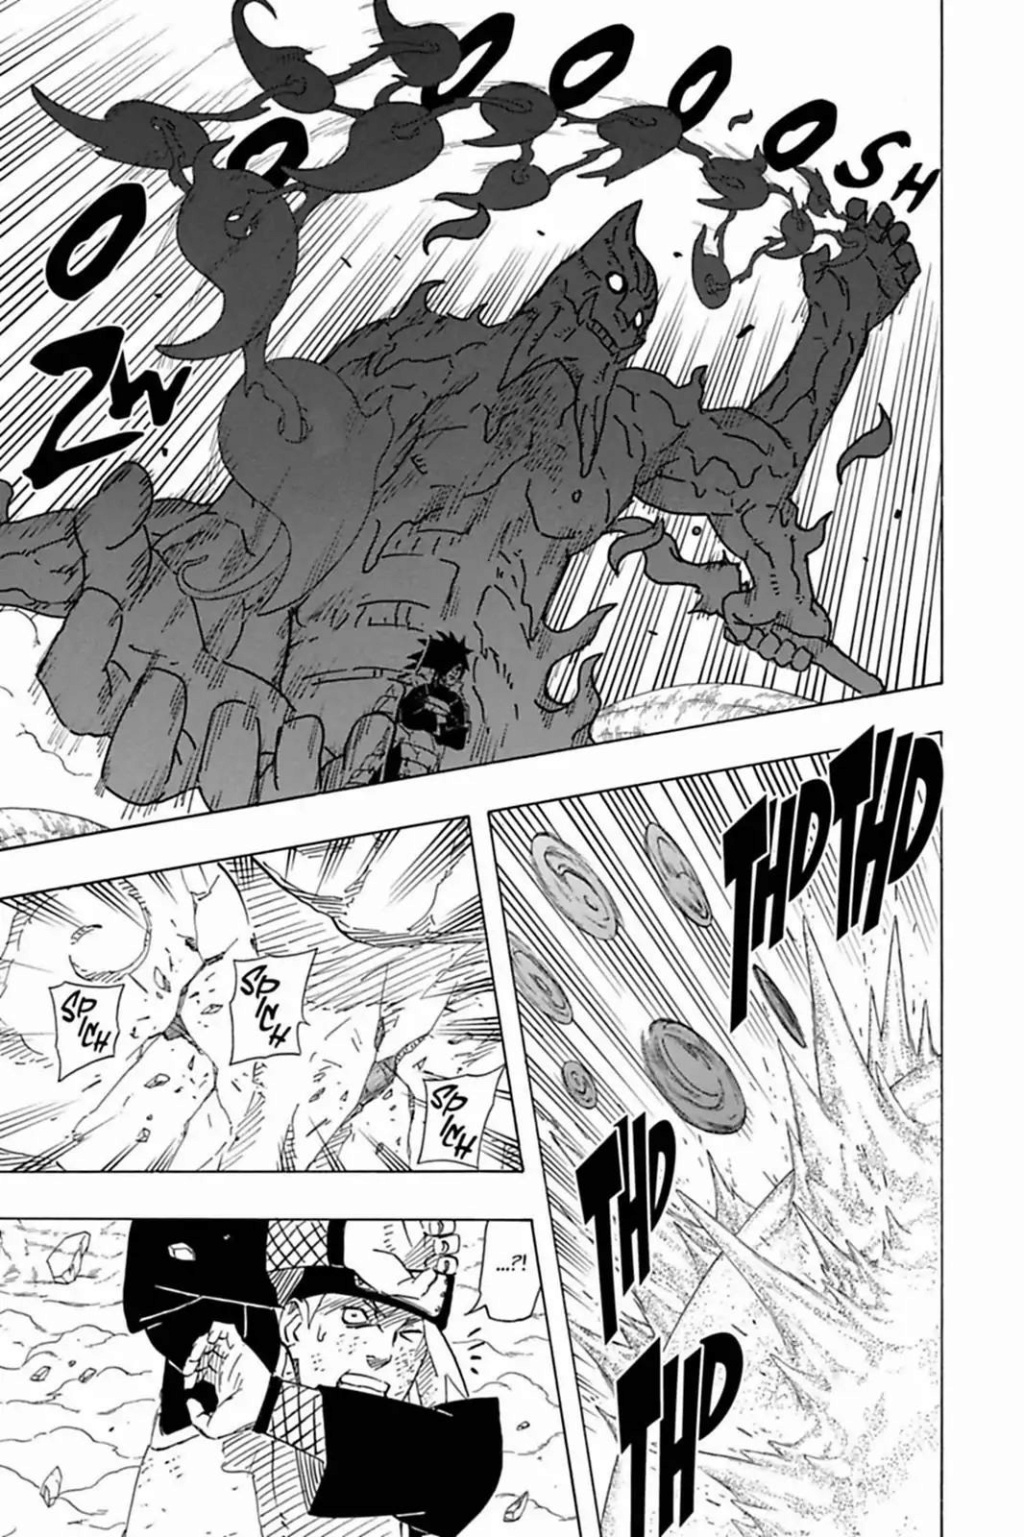 Sakura Novel vs Naruto 4 Caldas - Página 4 09_29410